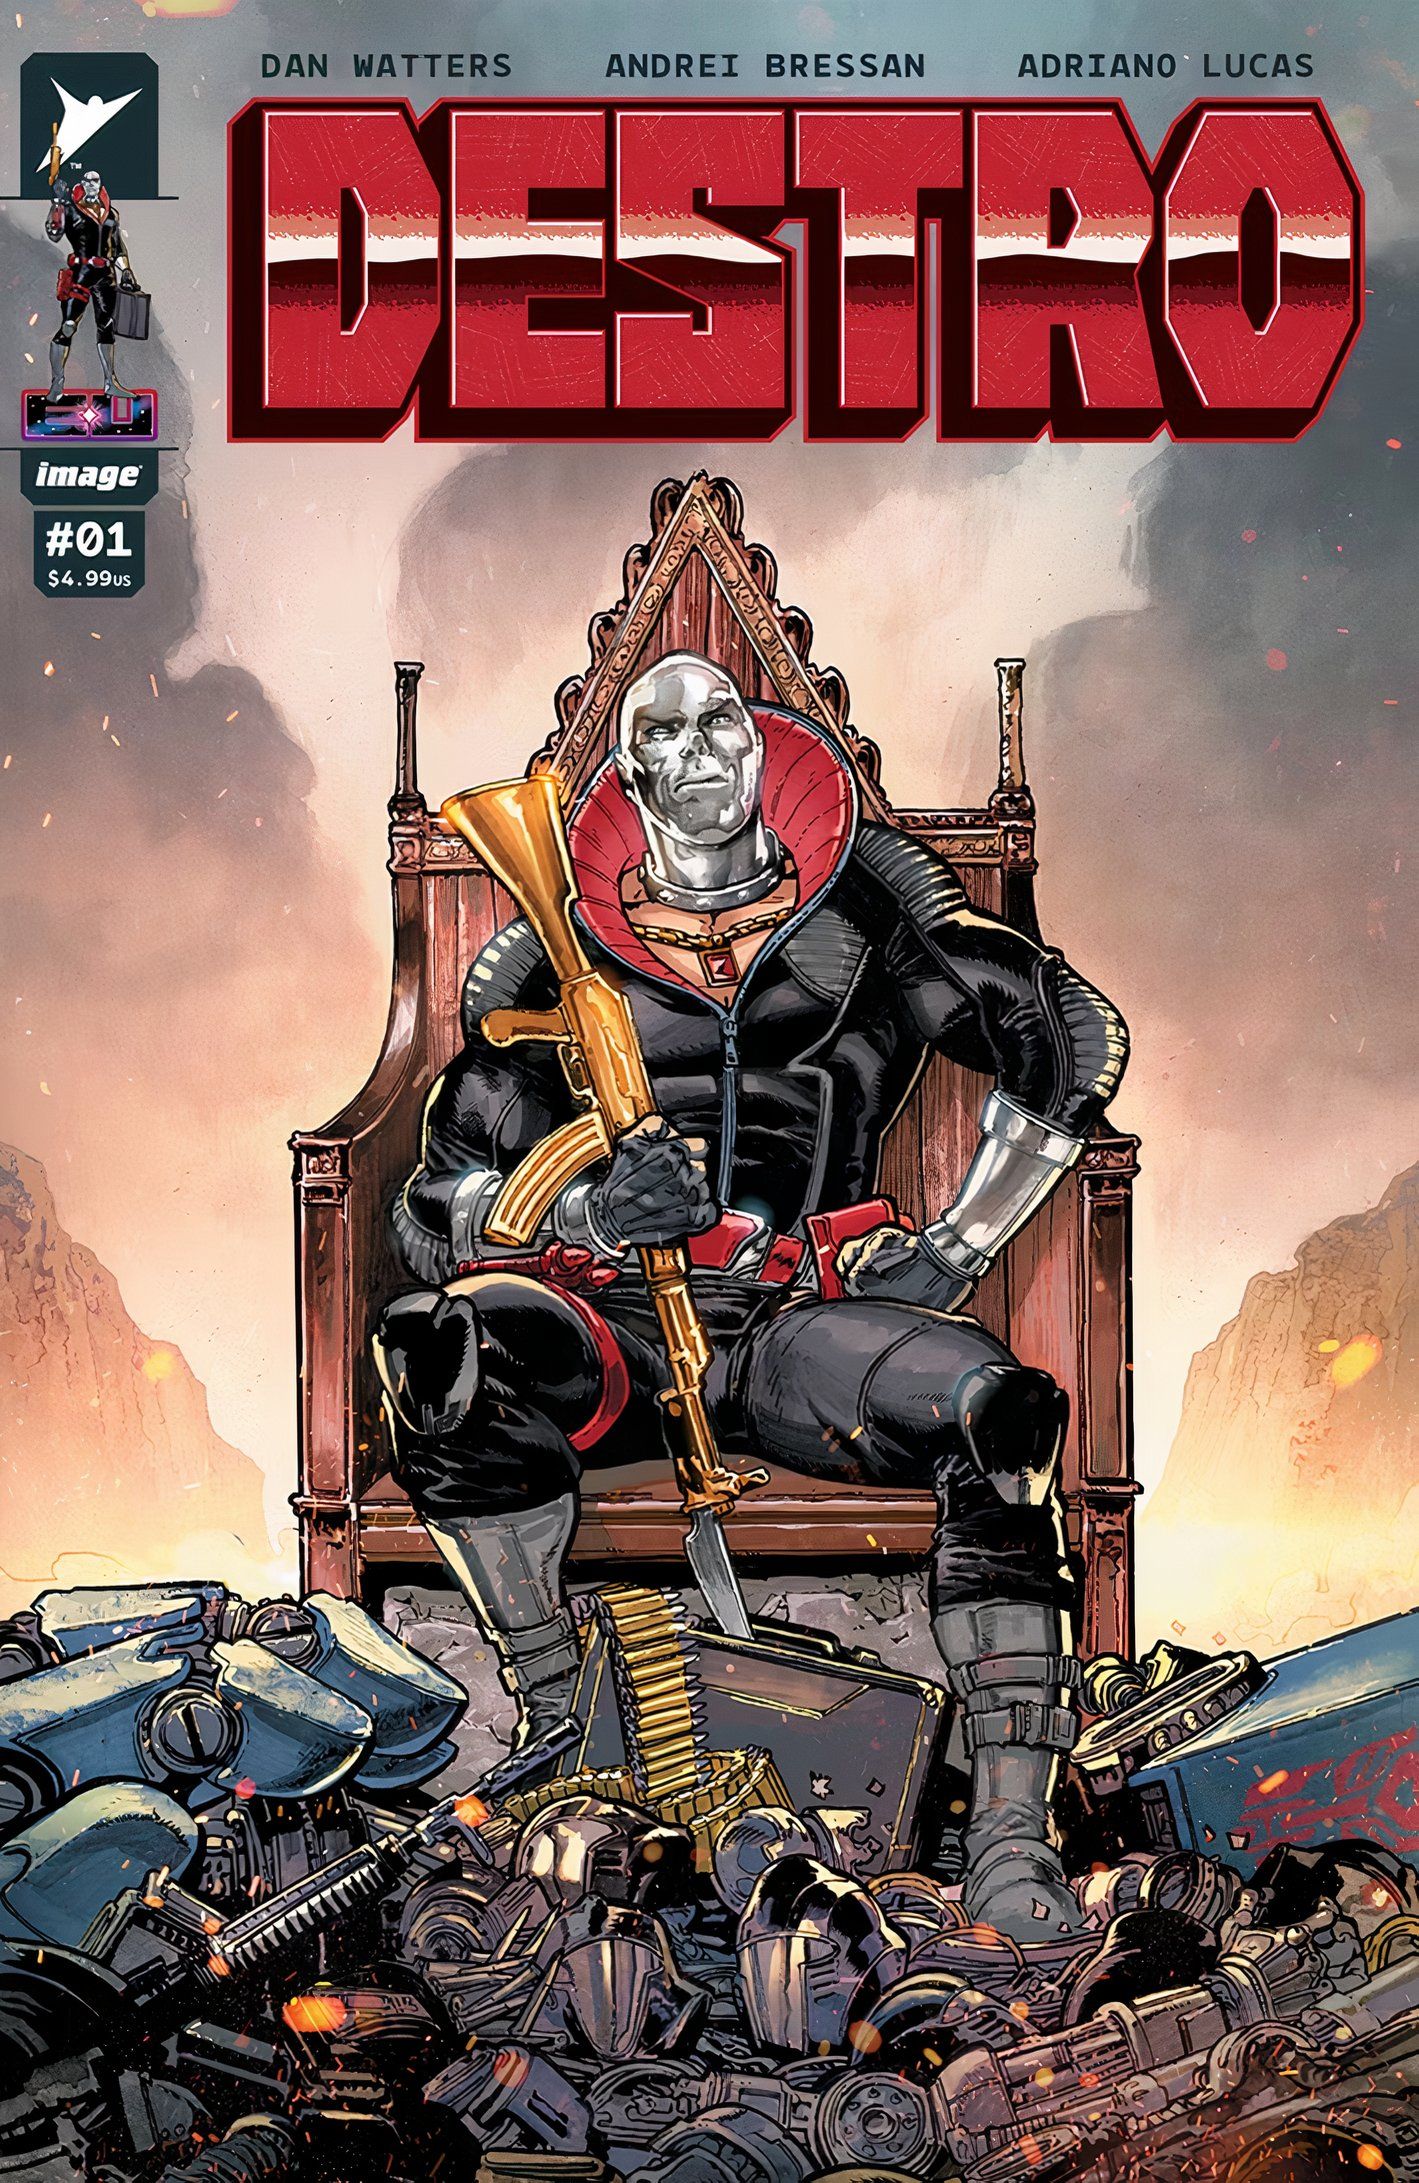 Destro #1 cover, Destro sitting on the throne of Darklonia with debris strewn at his feet.